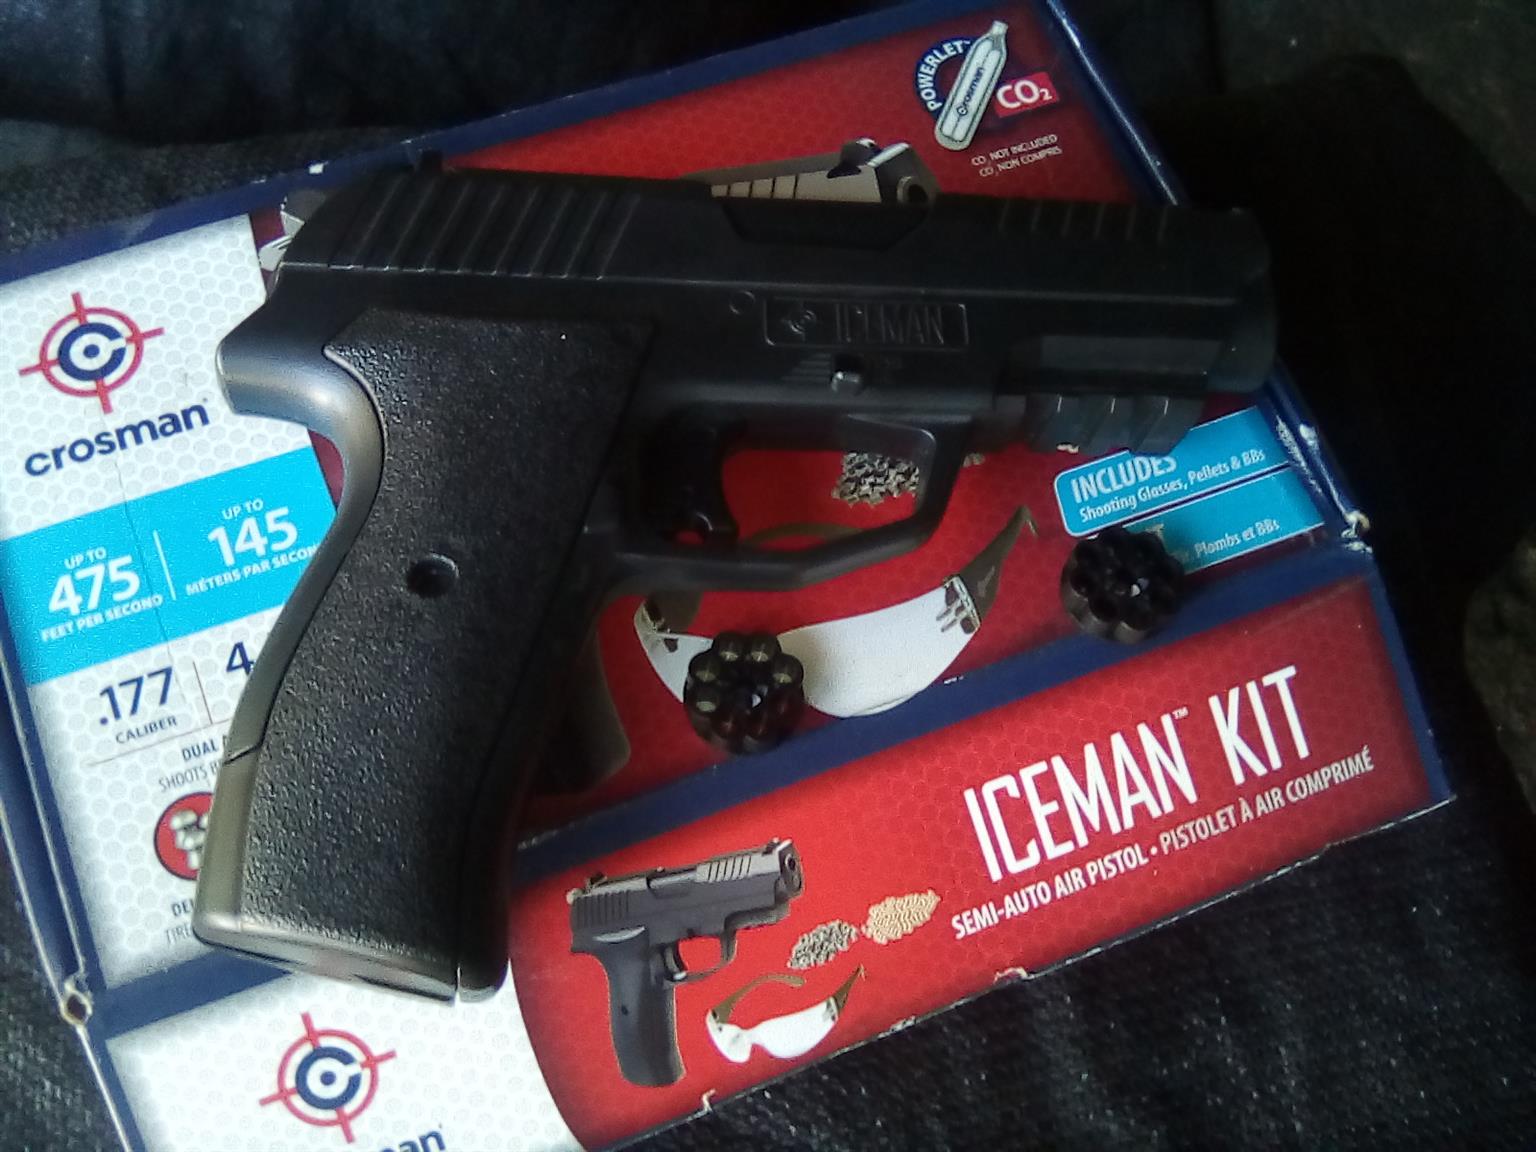 Crosman Iceman Co2 Pistol